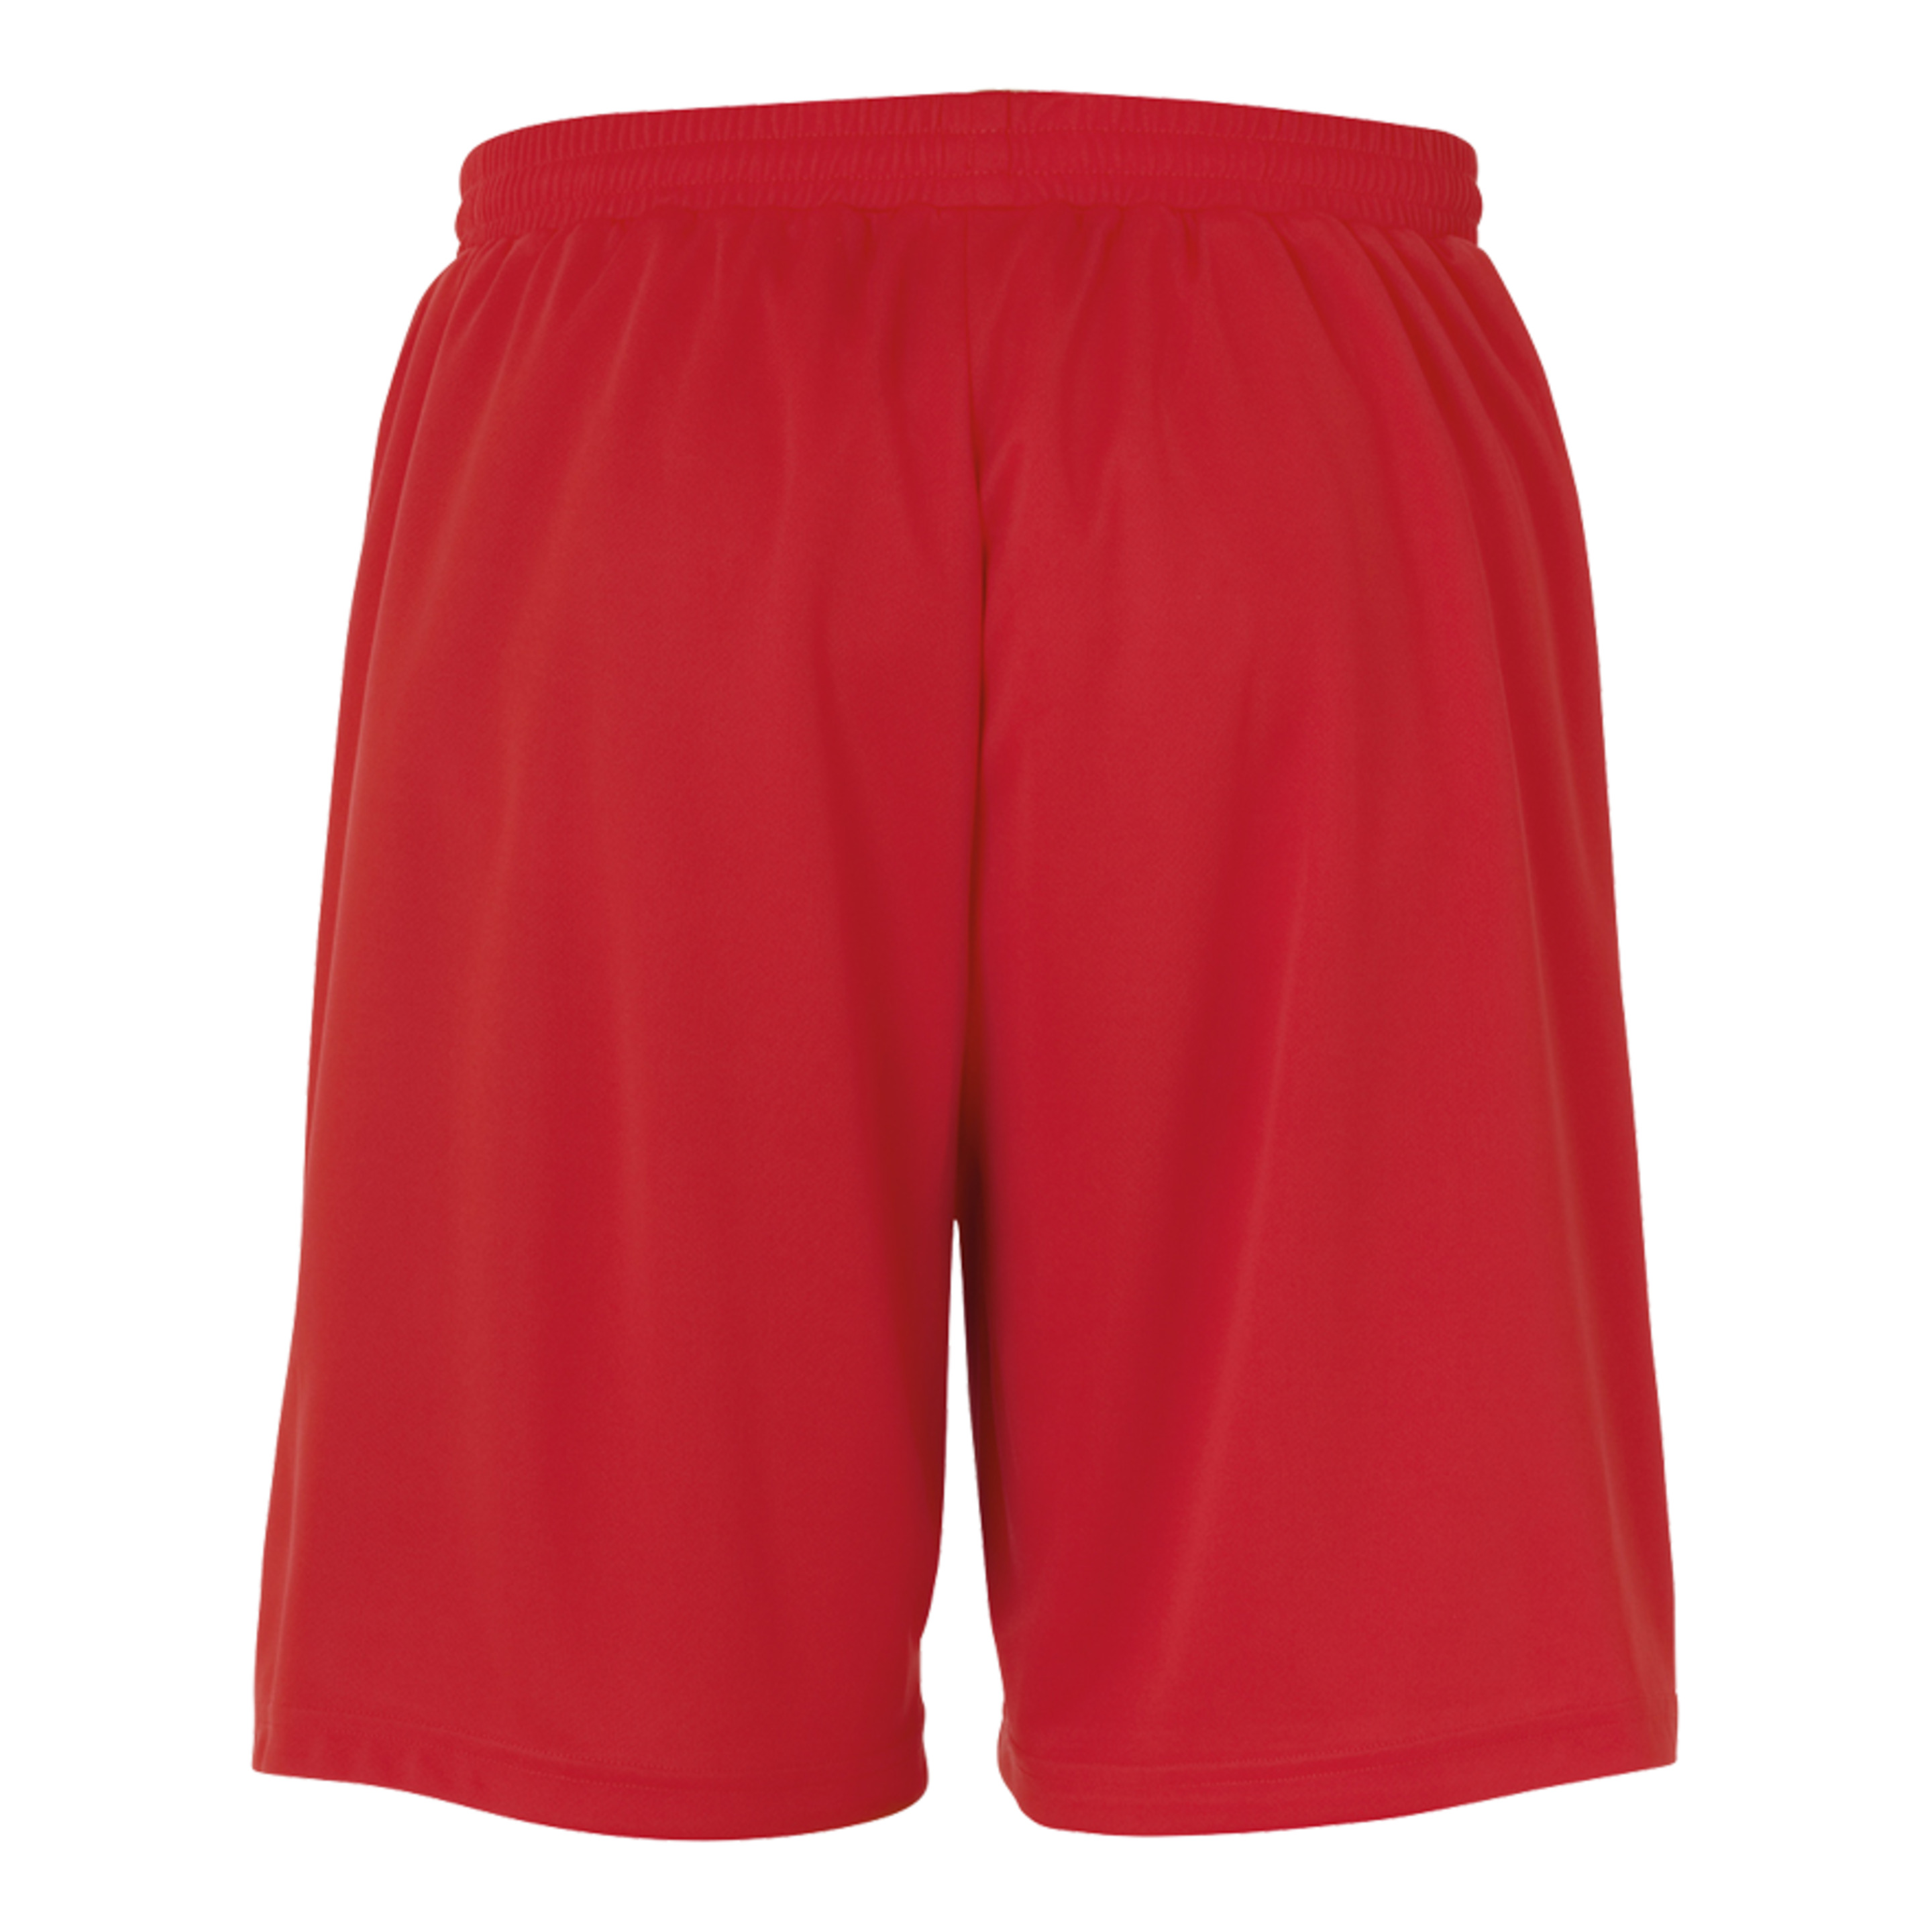 Peak Shorts Rojo/blanco Kempa